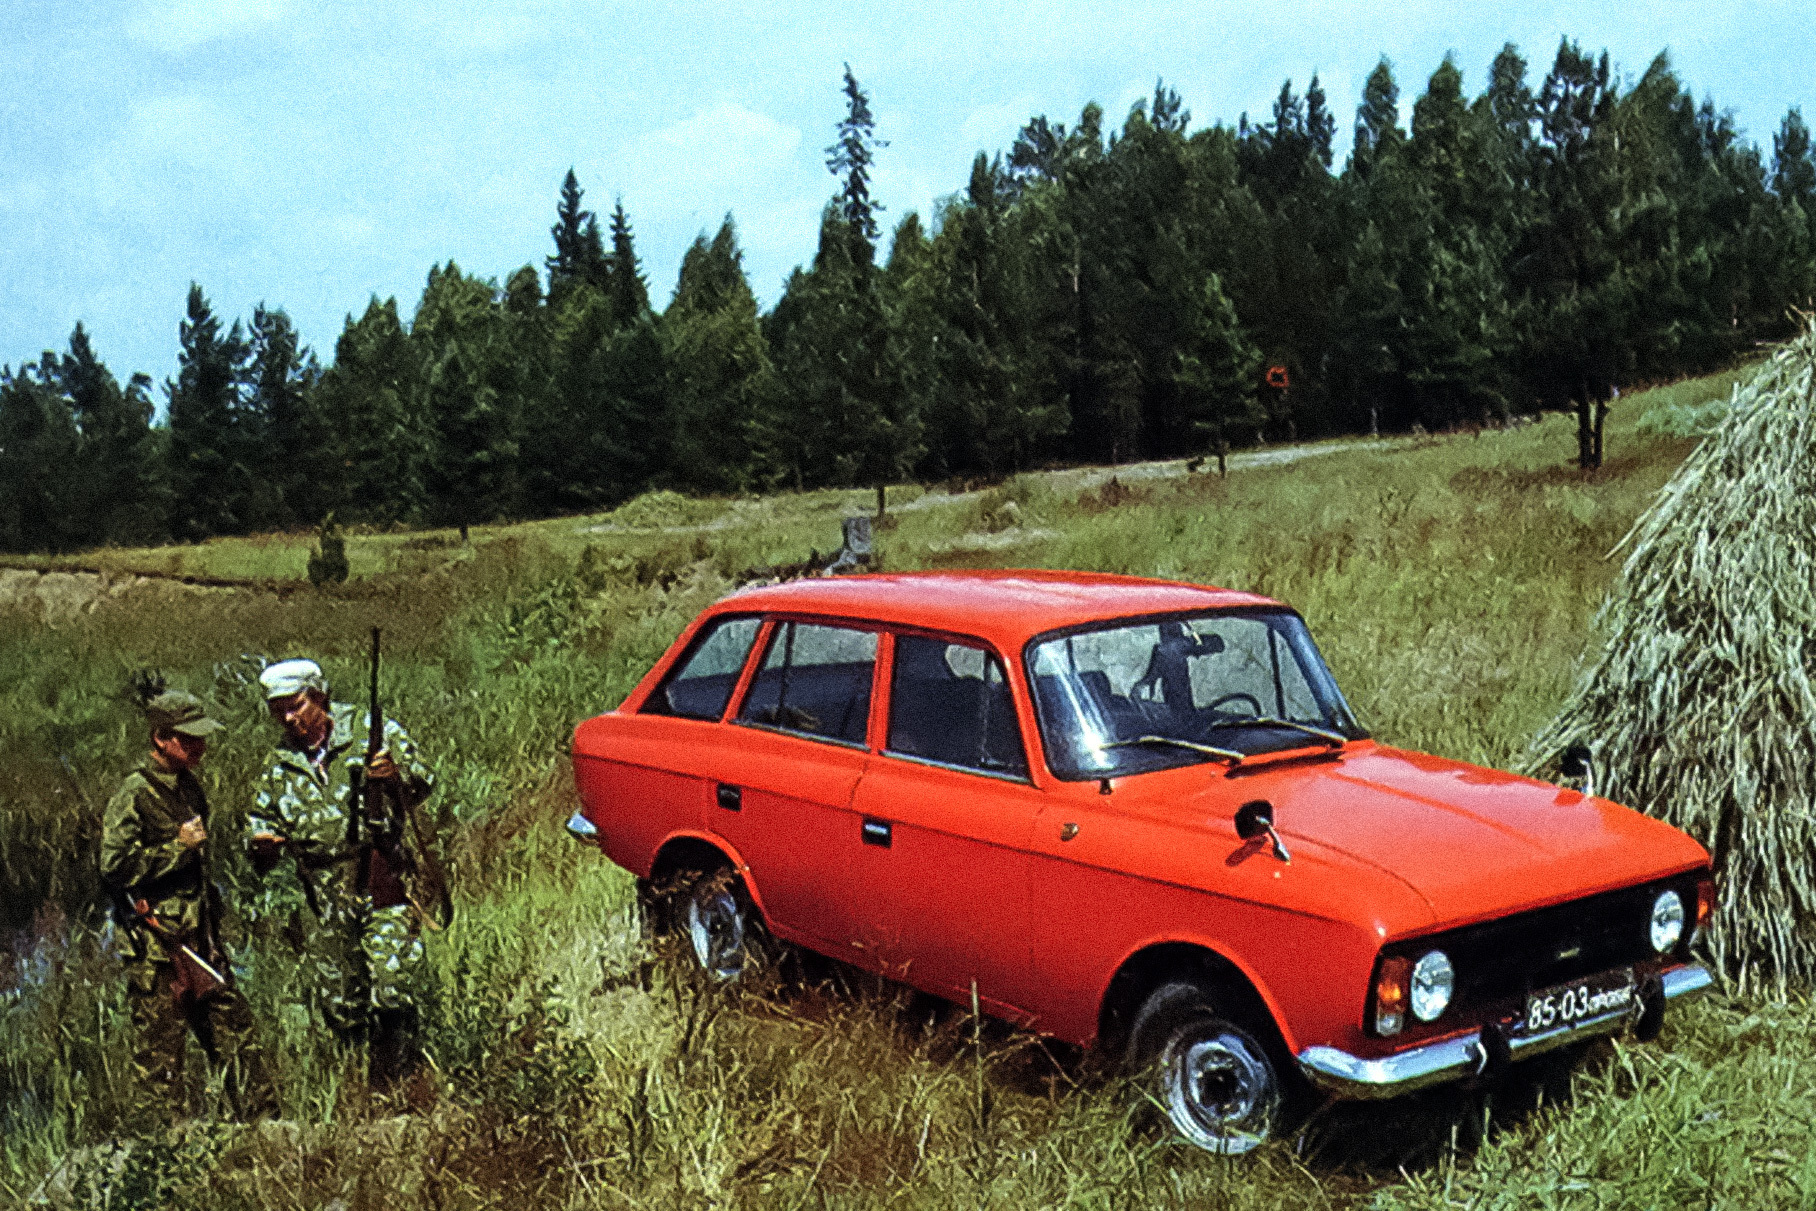      1970-           Motor